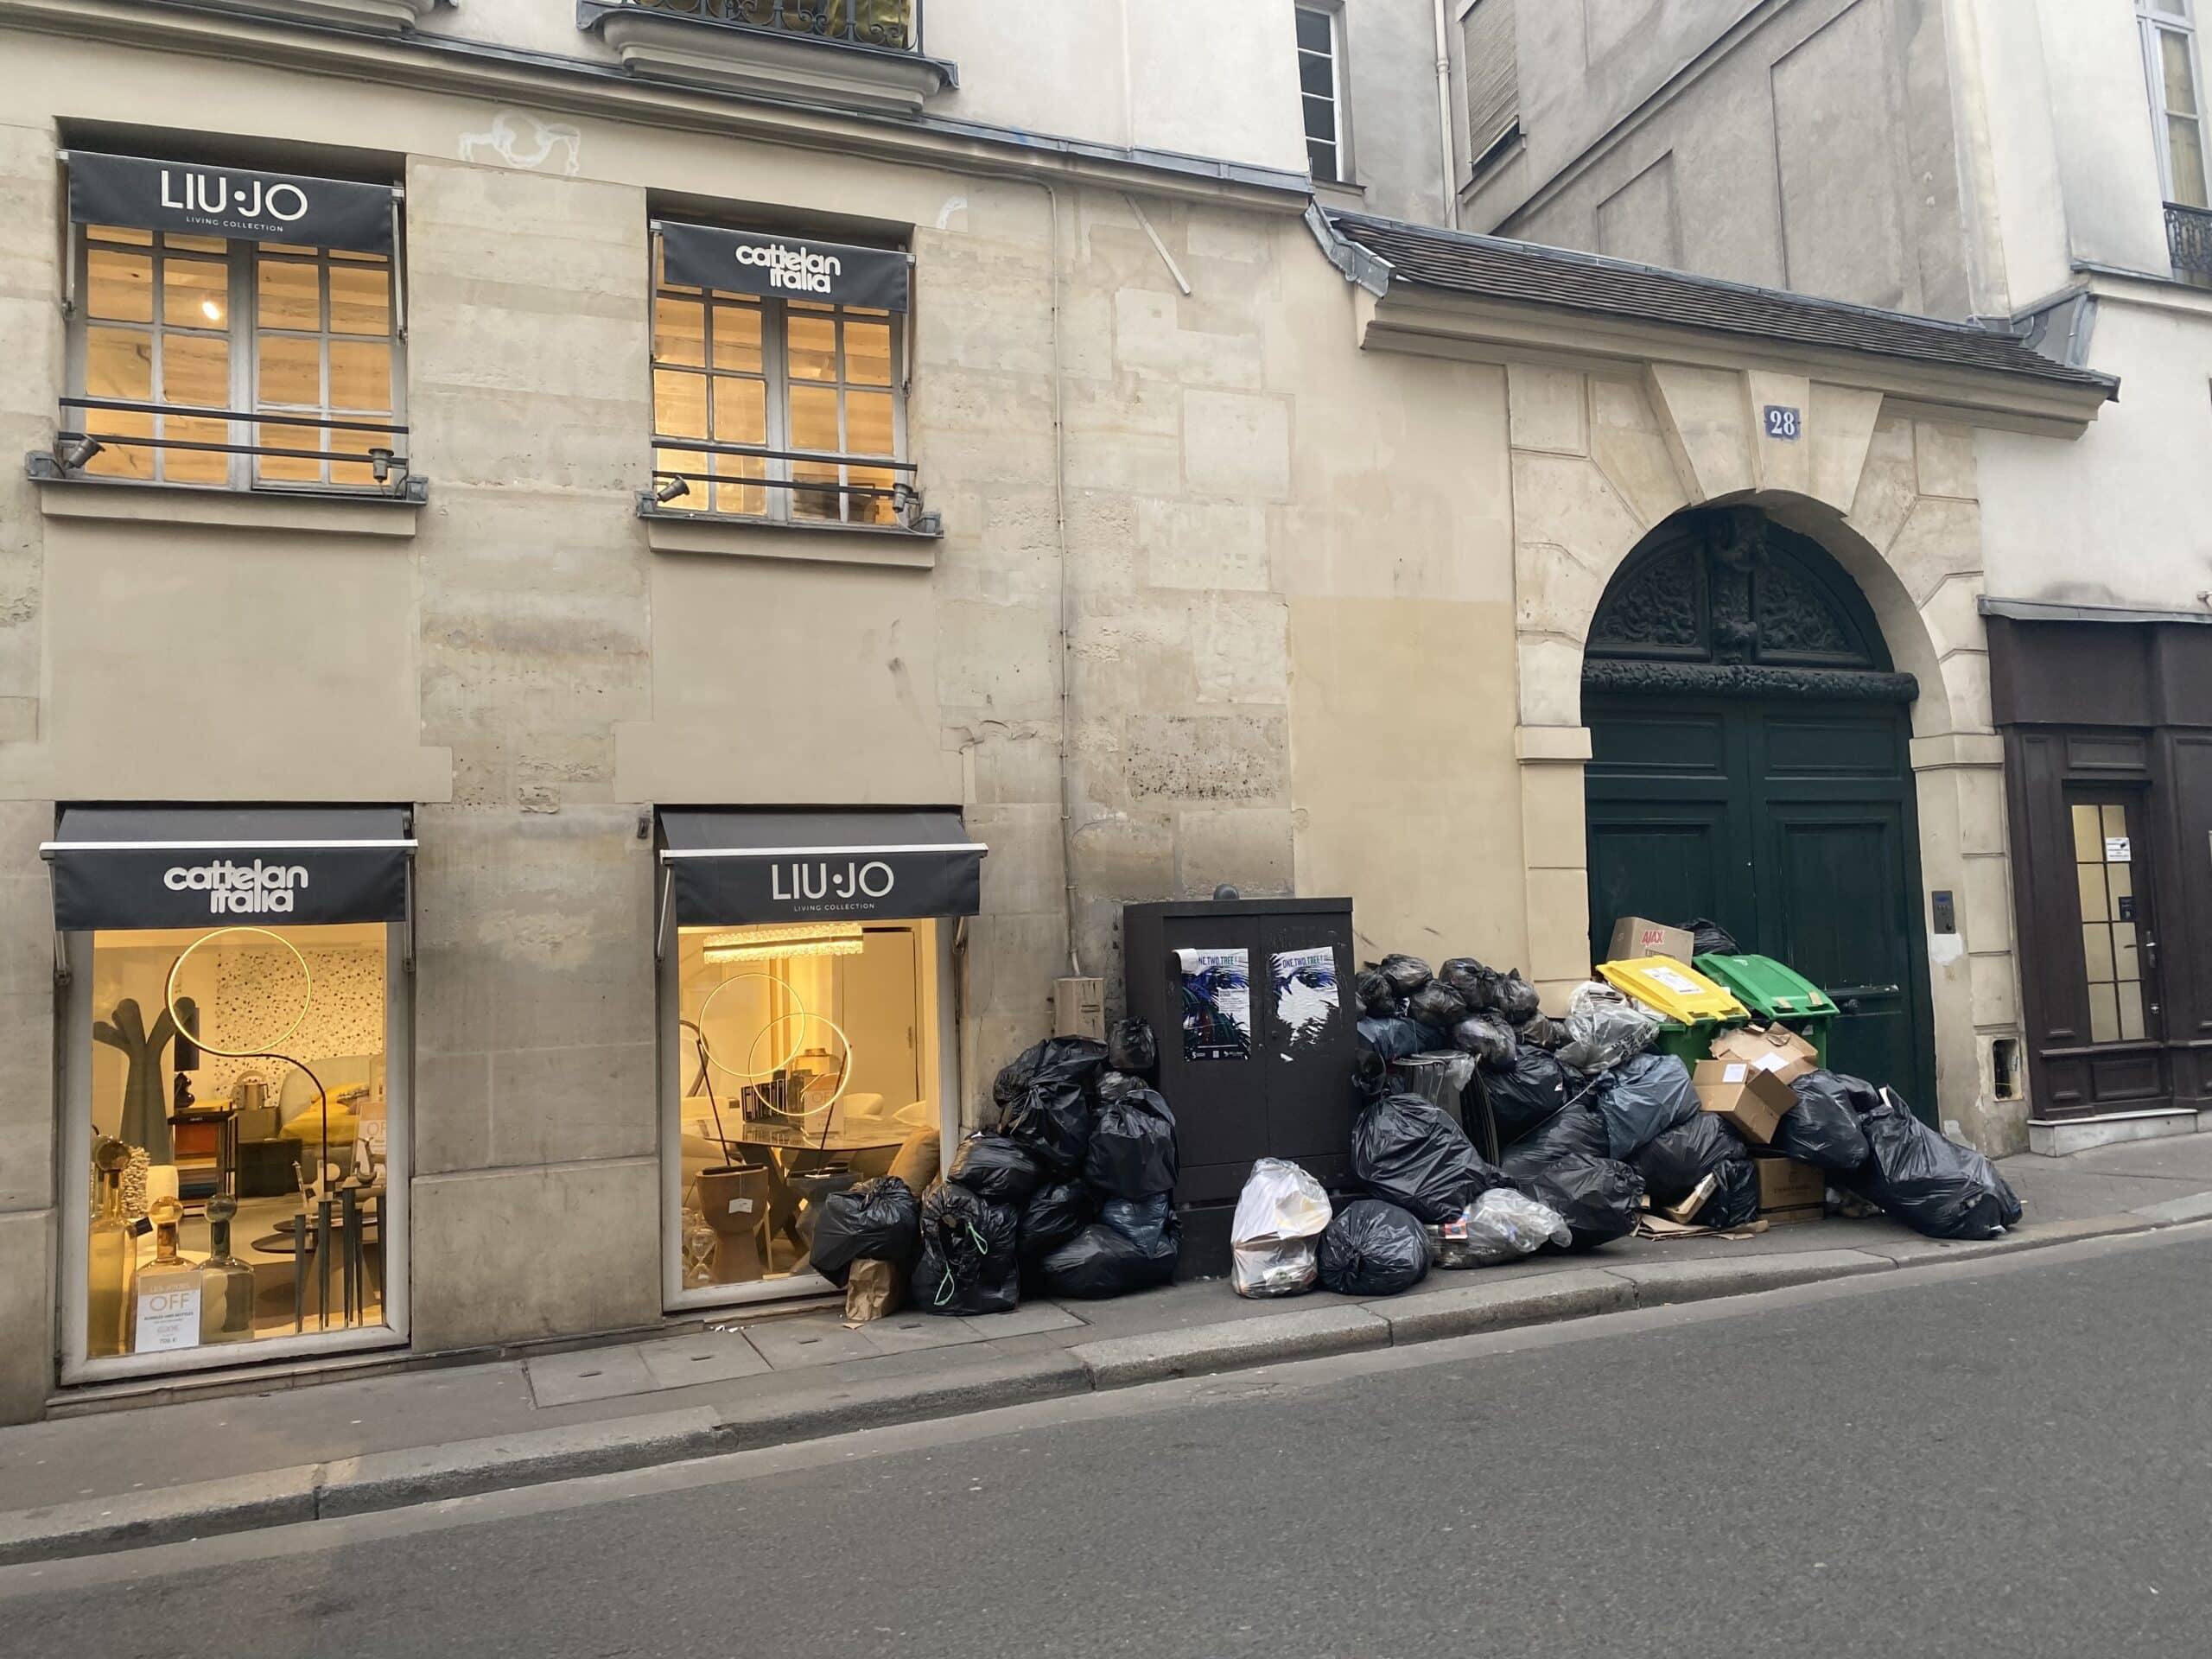 Trash blocks a Parisan sidewalk